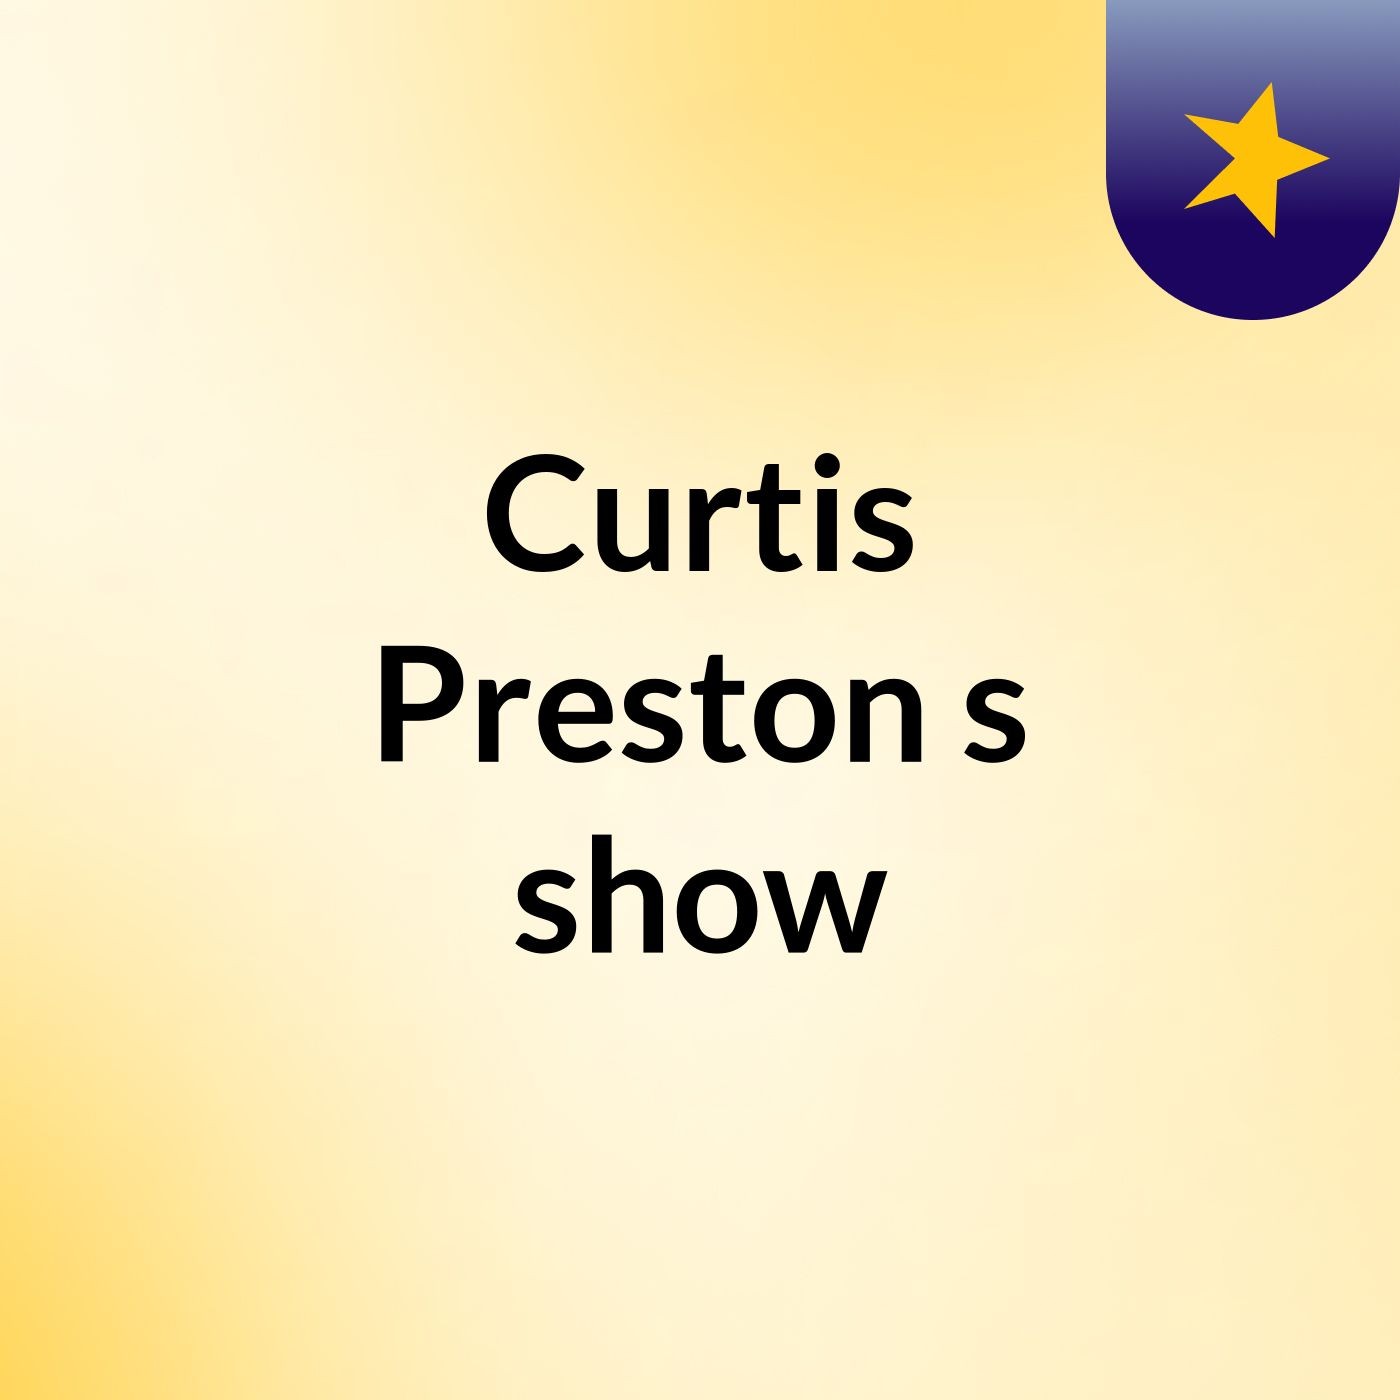 Curtis Preston's show